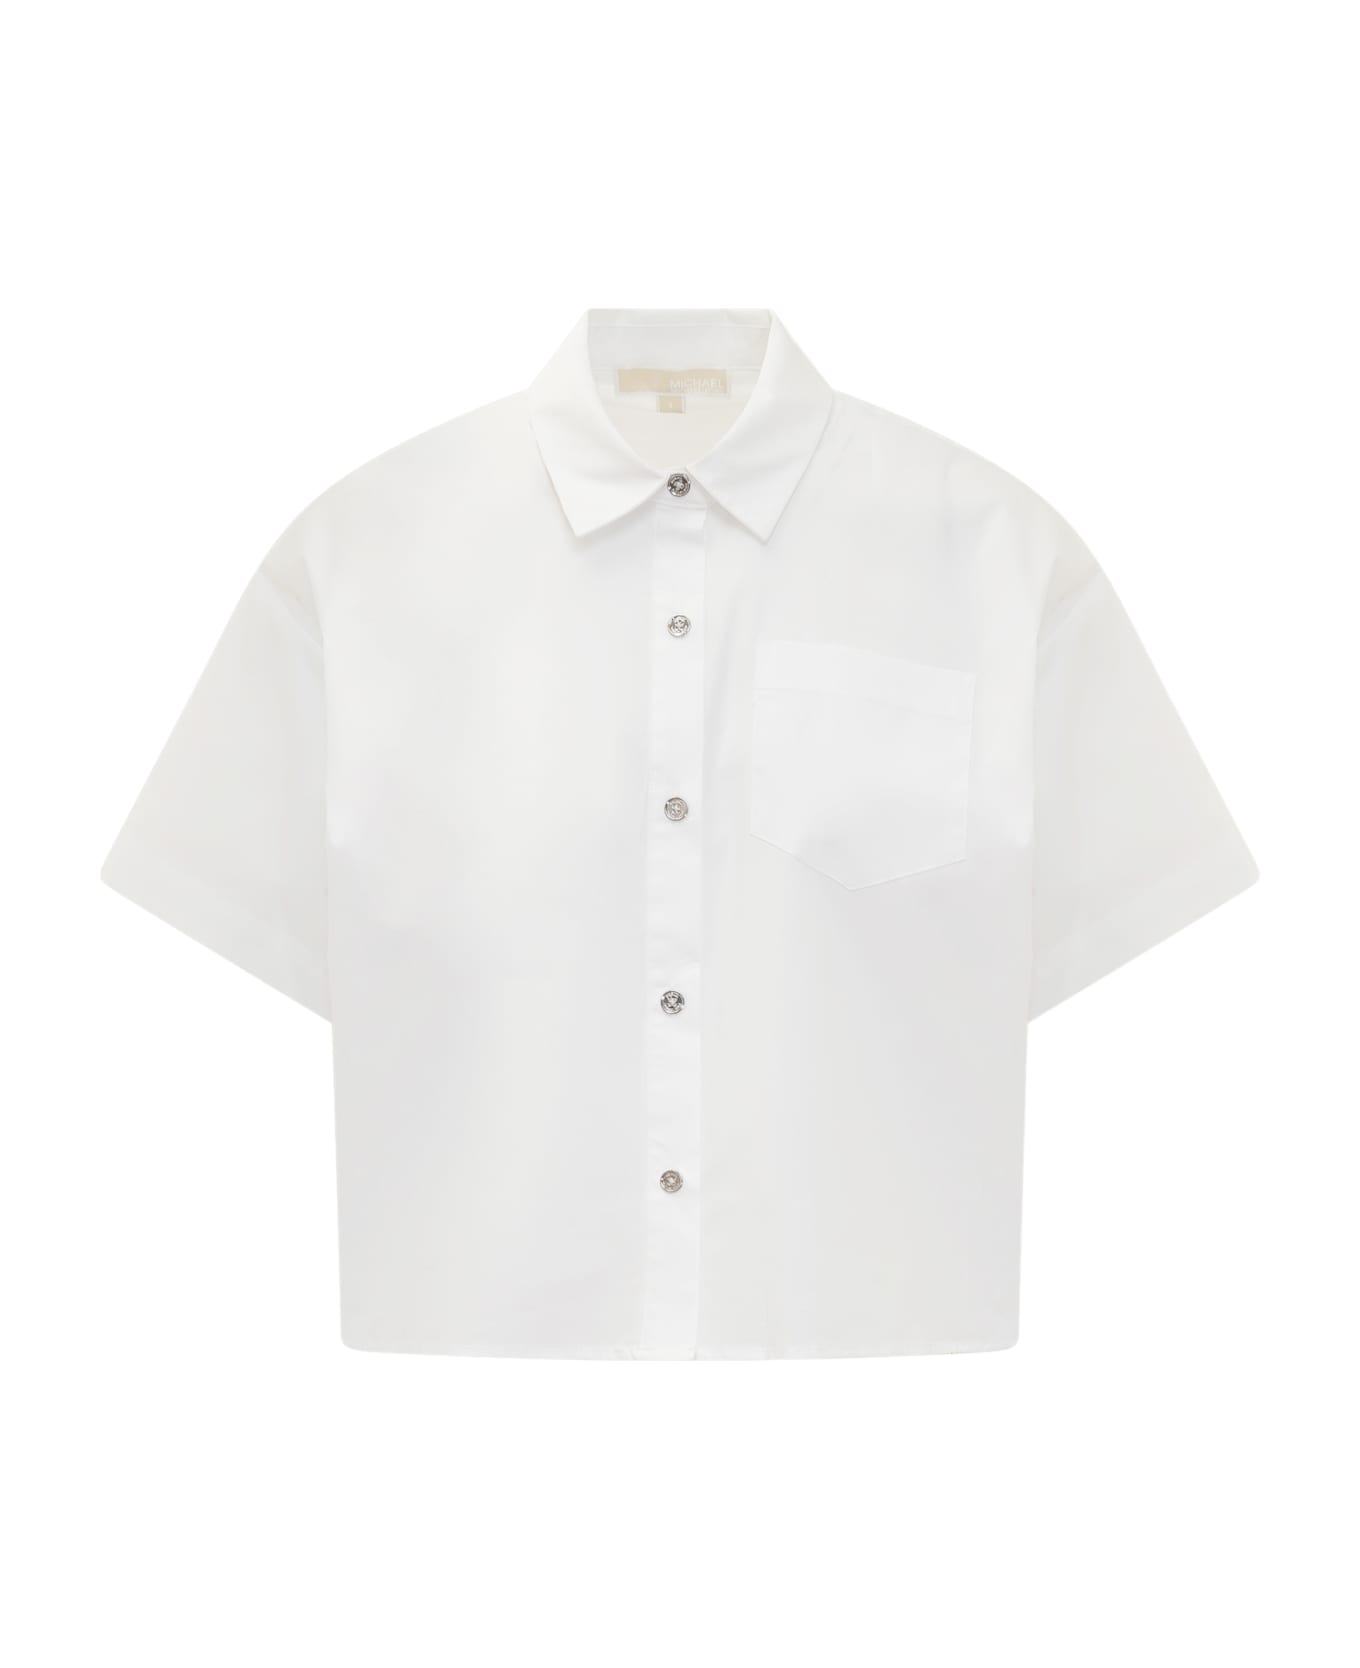 Michael Kors Collection Crop Shirt - White